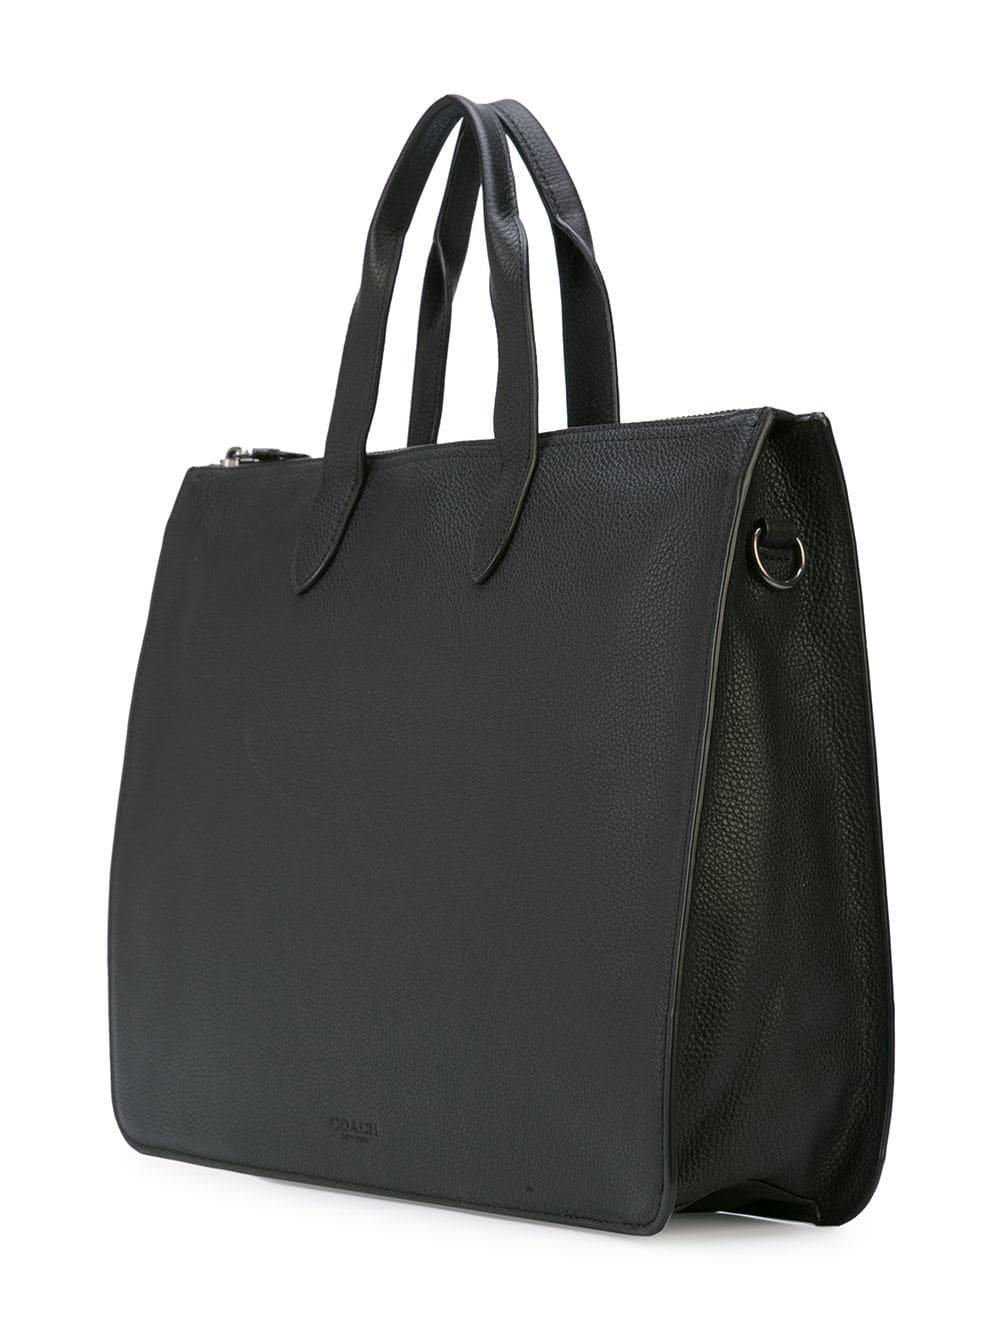 COACH Leather Metropolitan Laptop Bag in Black for Men - Lyst